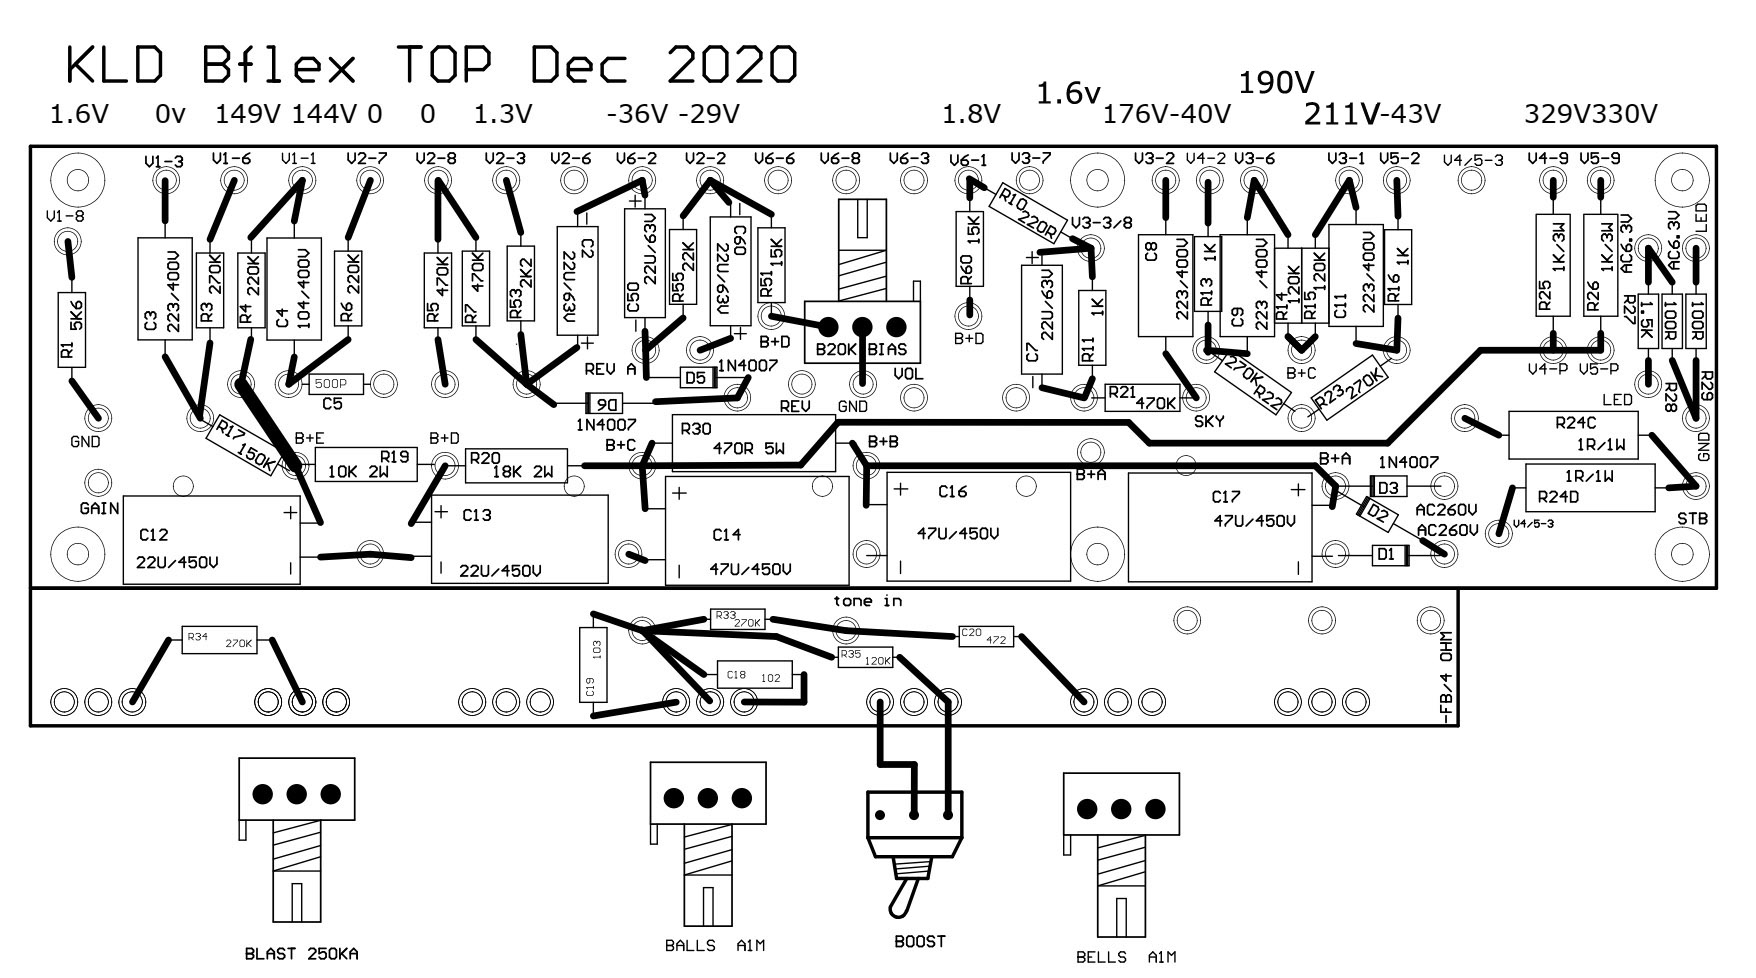 BFLEX25 voltage map of main board